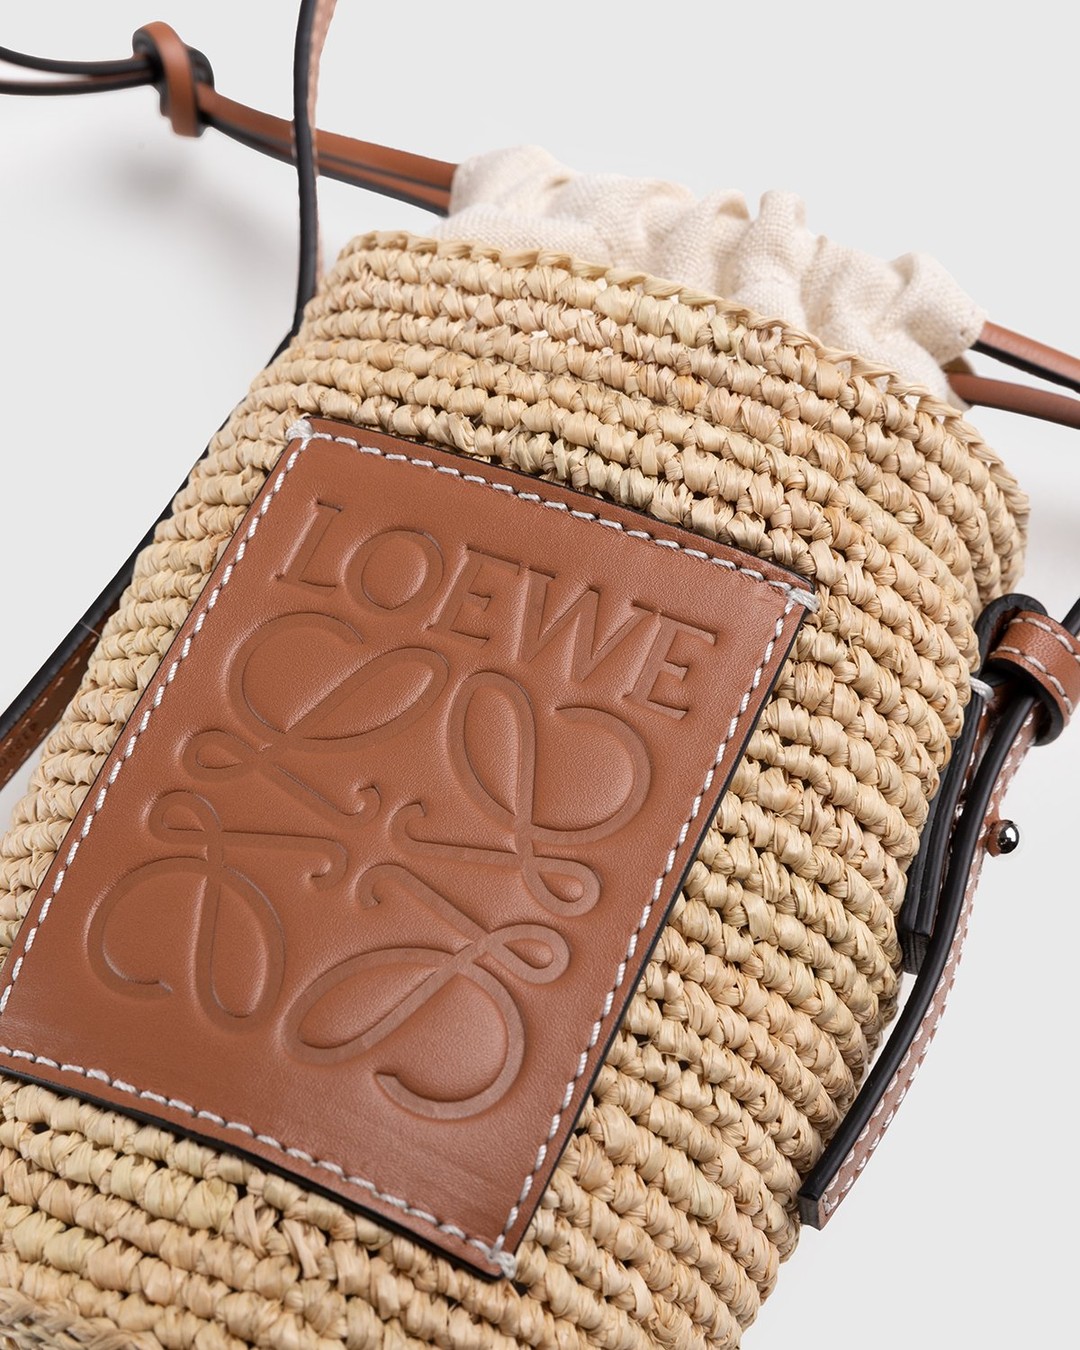 Loewe – Paula's Ibiza Cylinder Pocket Bag Natural/Tan - Bags - Brown - Image 3